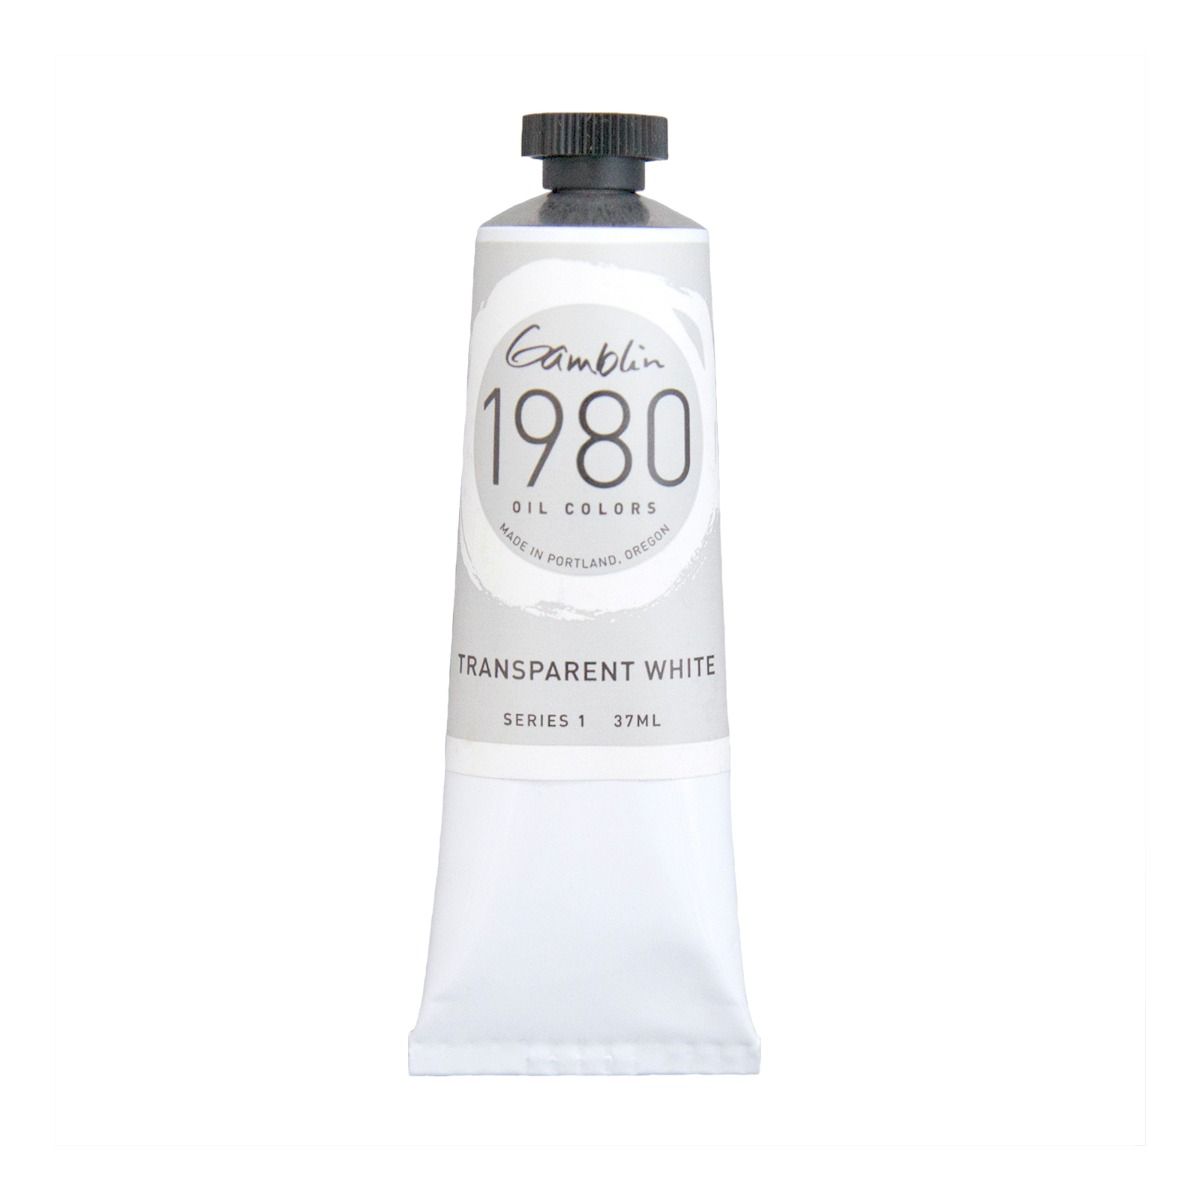 Gamblin 1980 Oils - Transparent White, 37 ml (1.25oz)